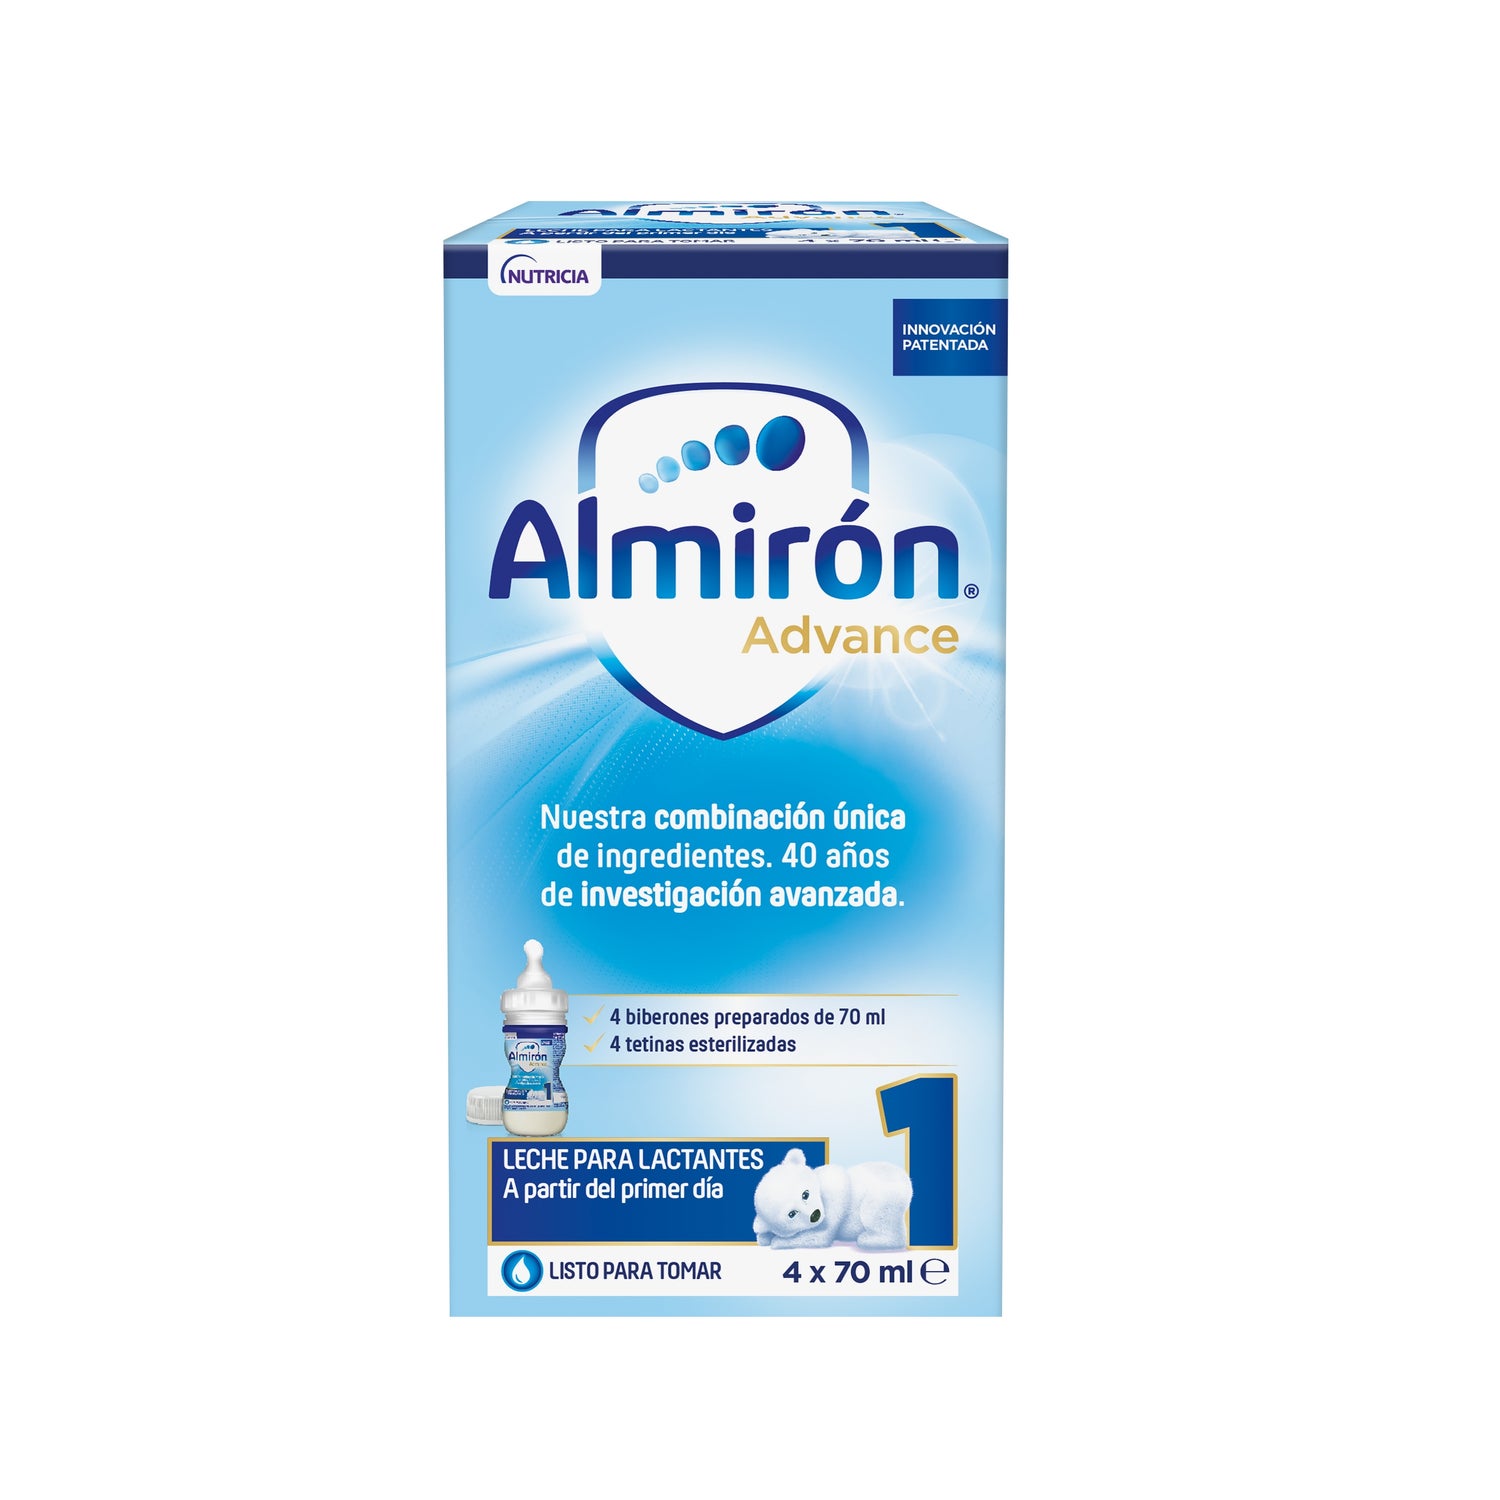 Nutricia Almiron Profutura 1 (0-6m) Milk Powder 800gr